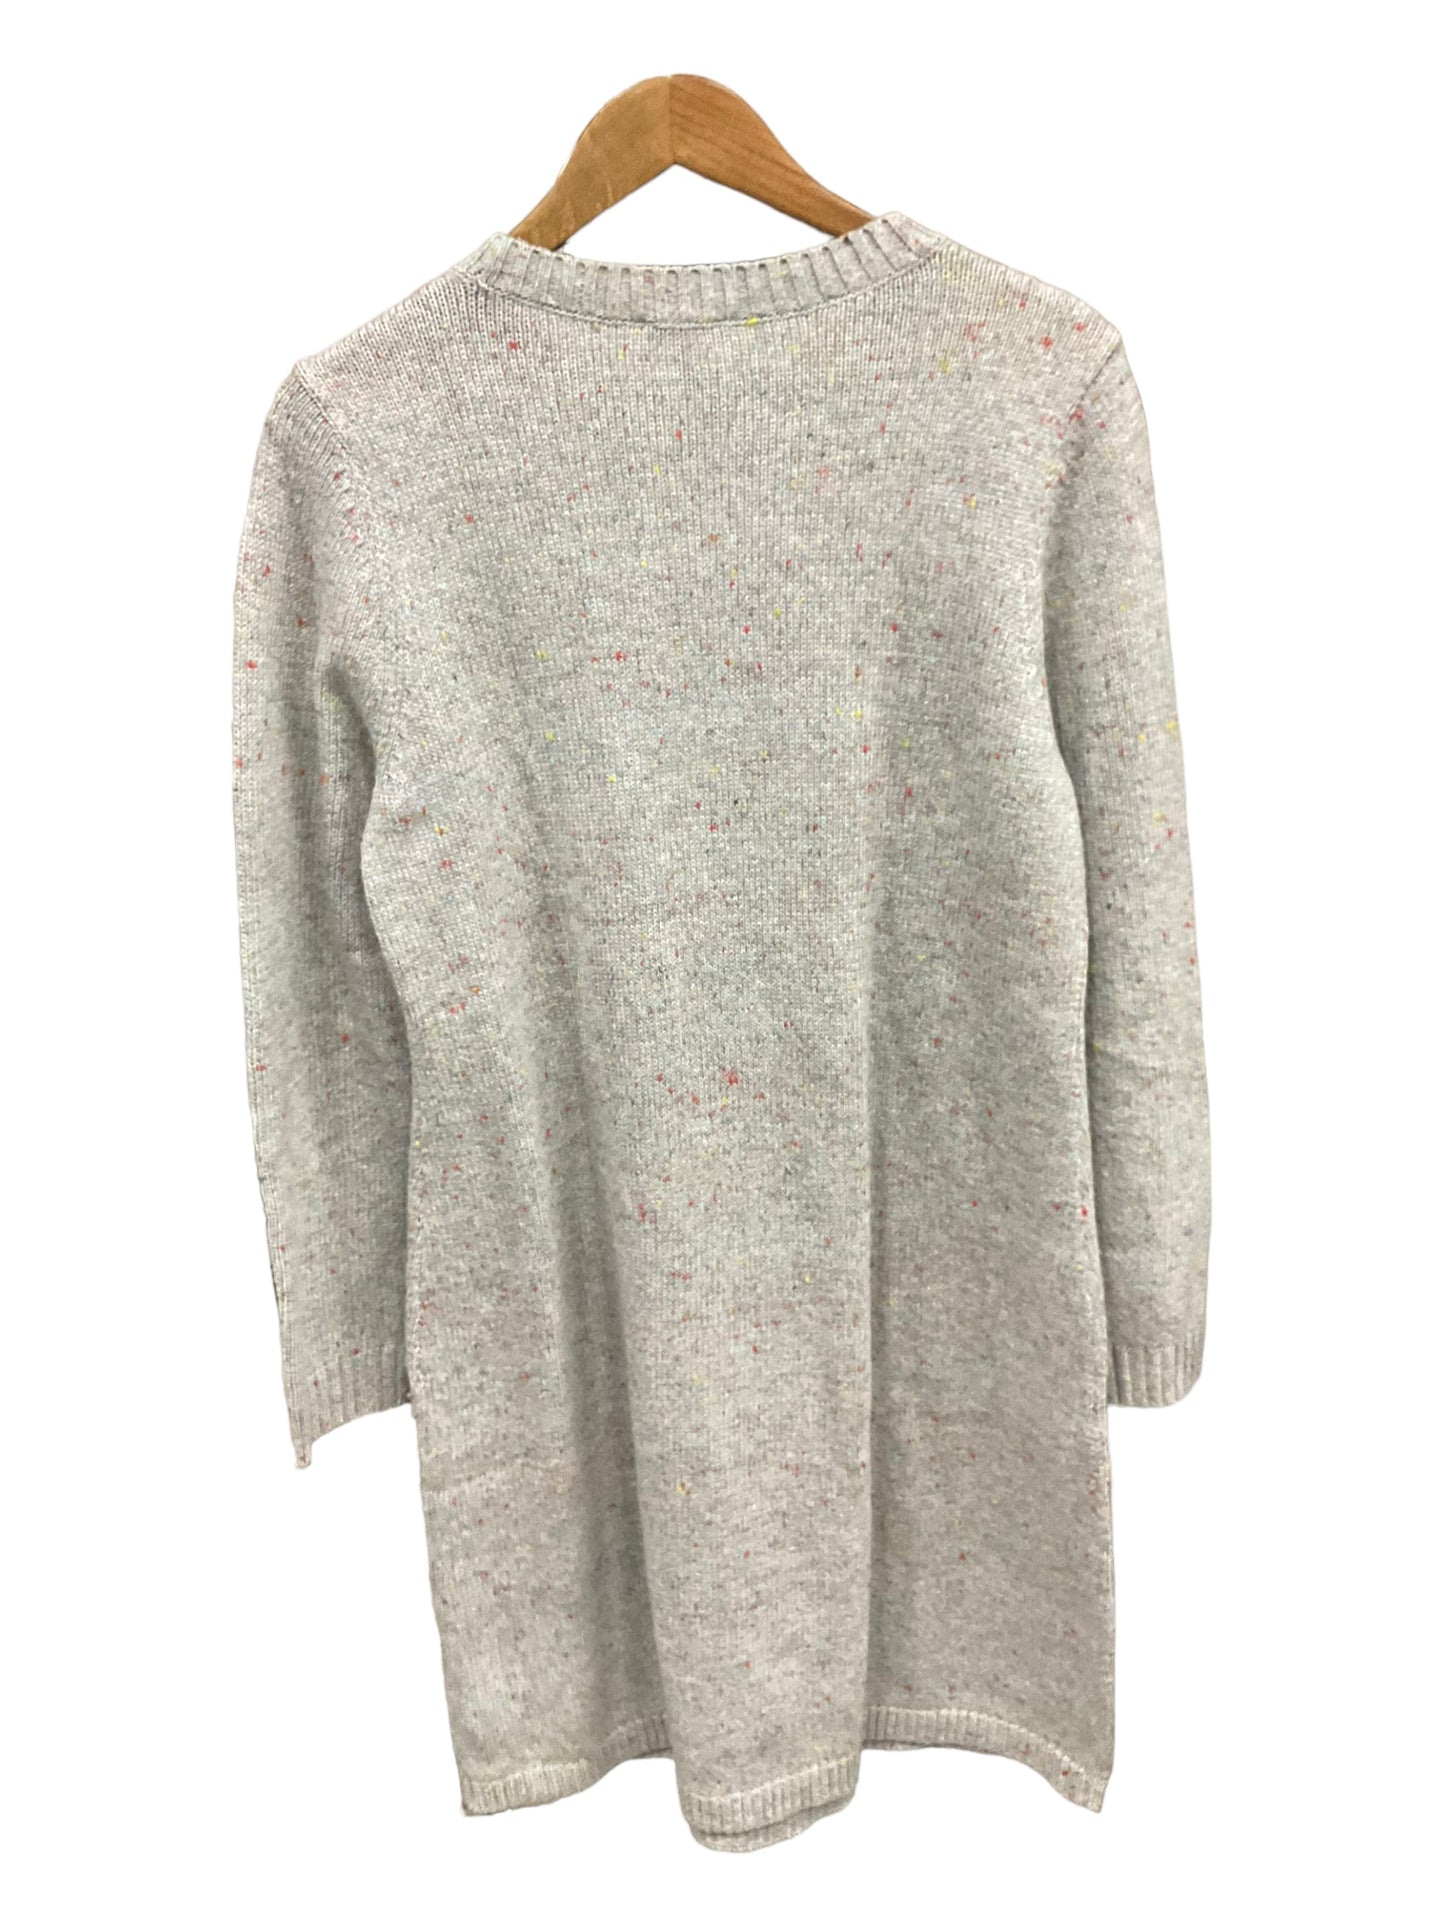 Dress Sweater By Talbots  Size: L